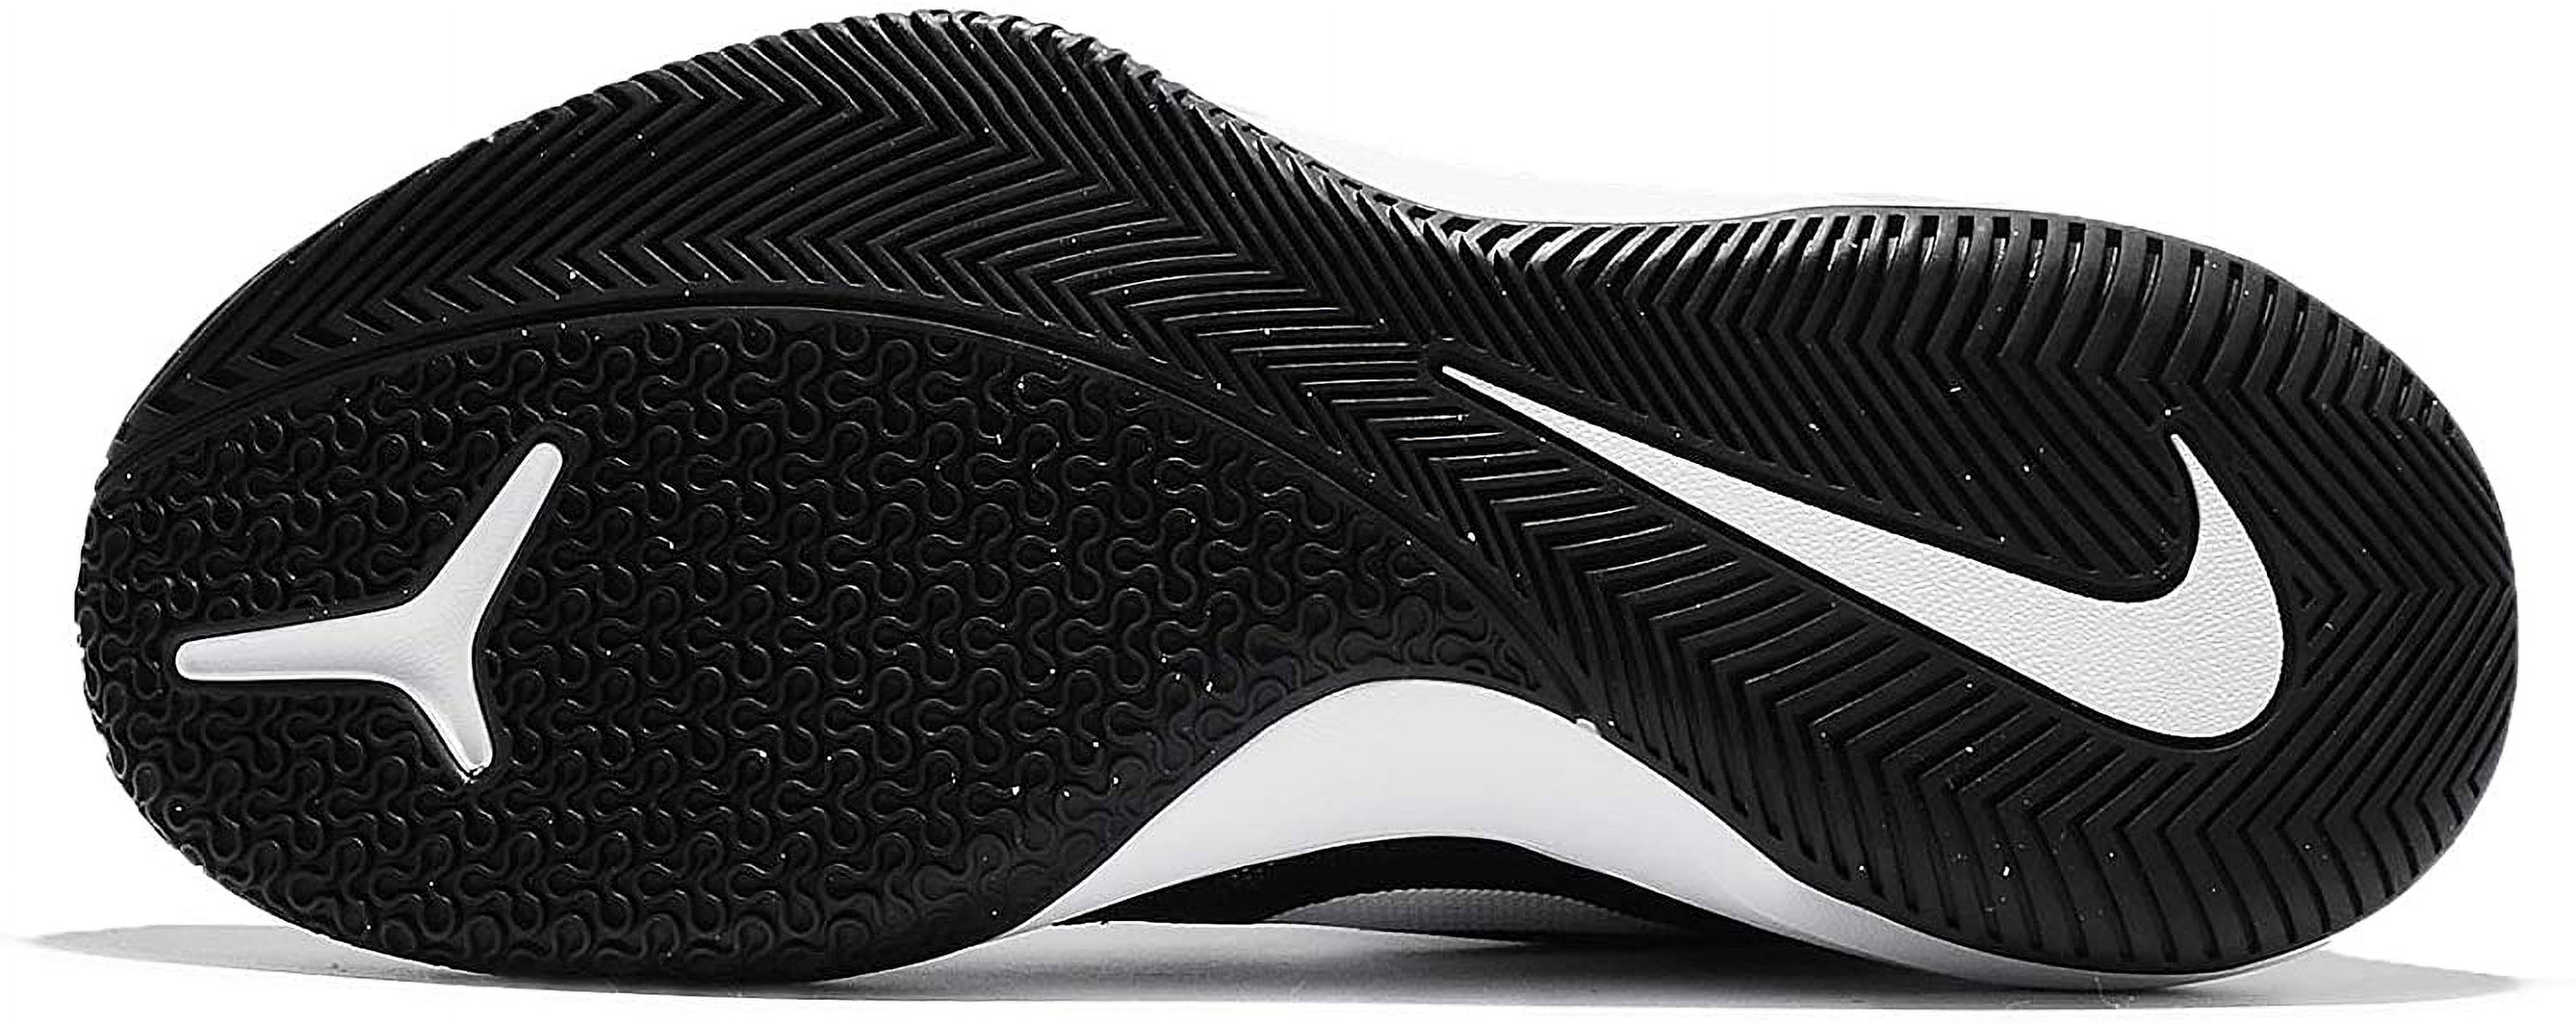 NIKE Men's Air Versitile Nbk Basketball-Shoes - image 4 of 8